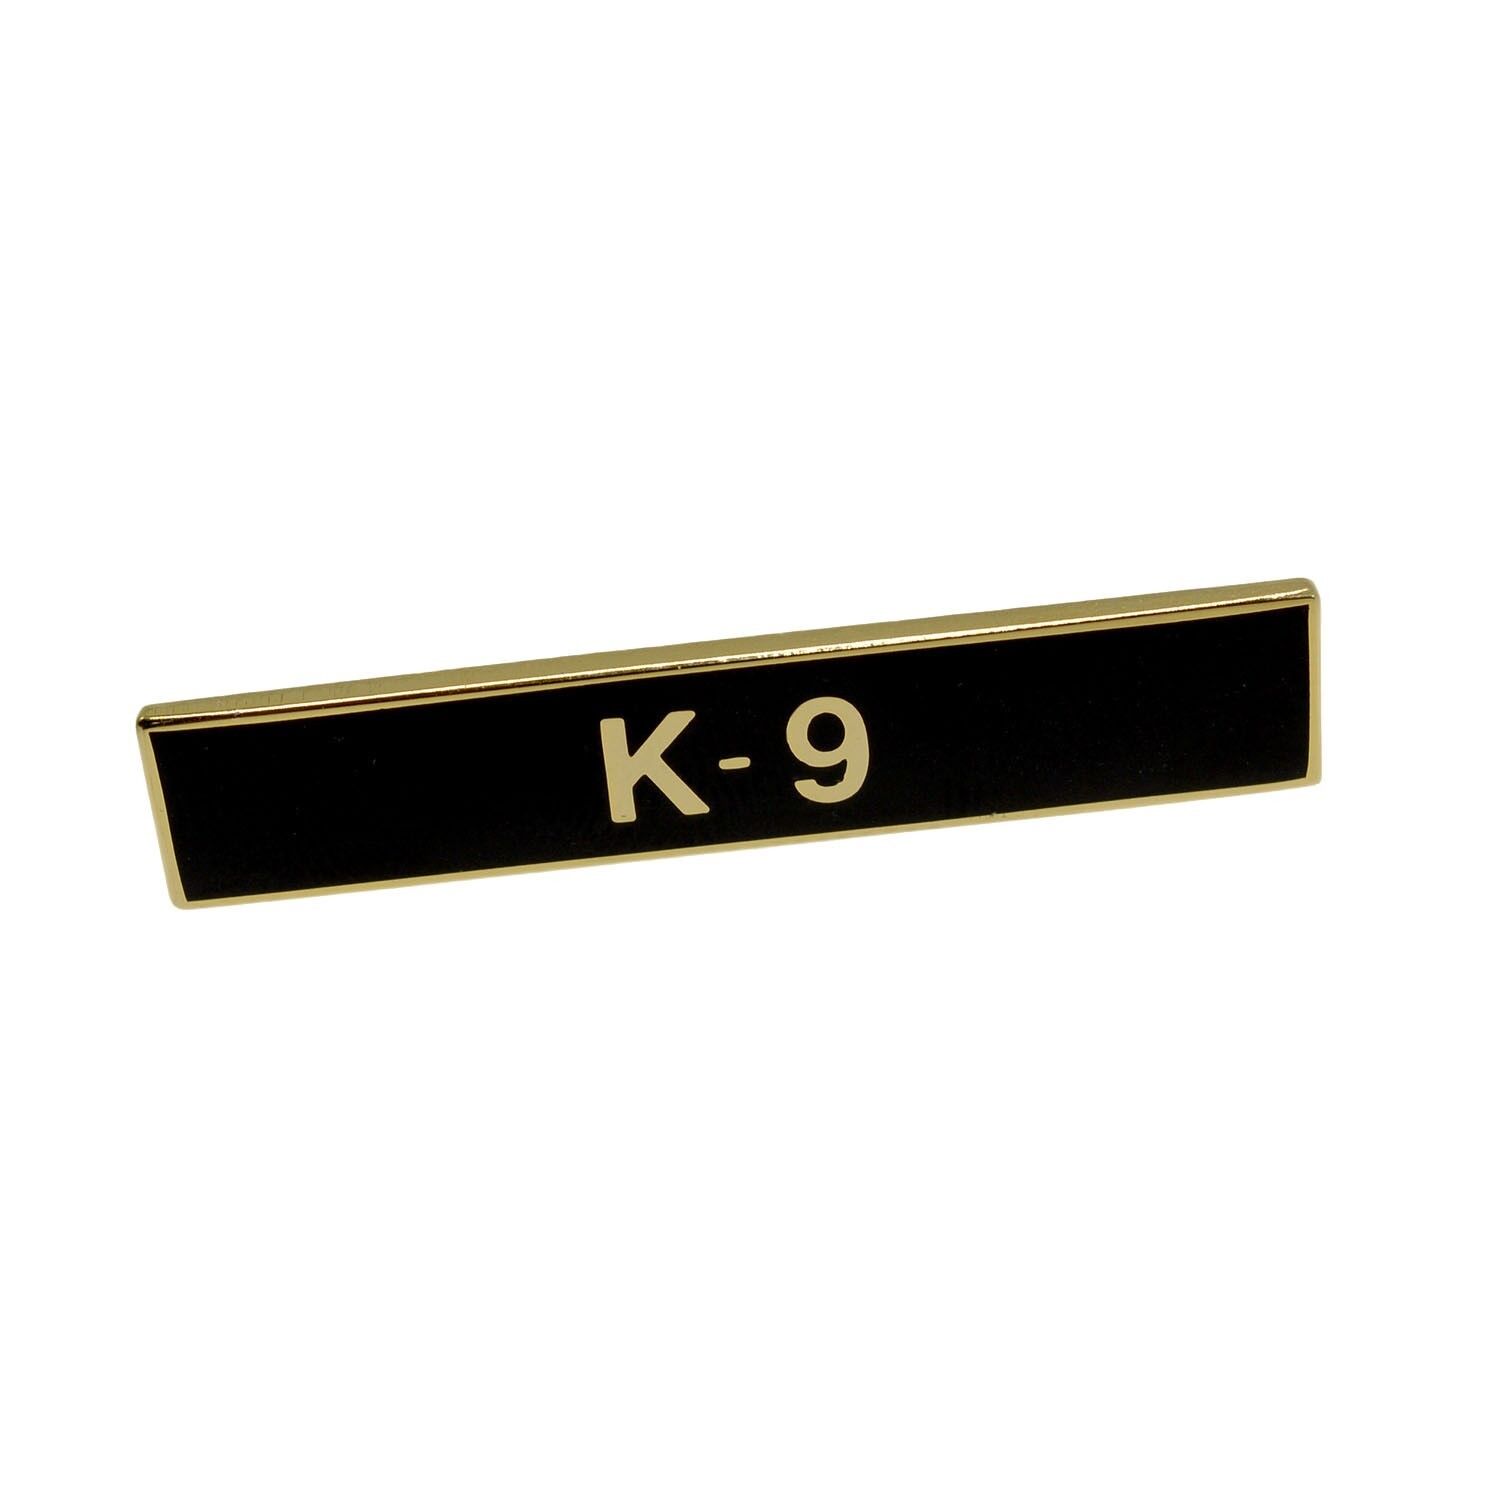 K-9 Citation Bar Canine Police Certification Merit Award Lapel Pin Gold